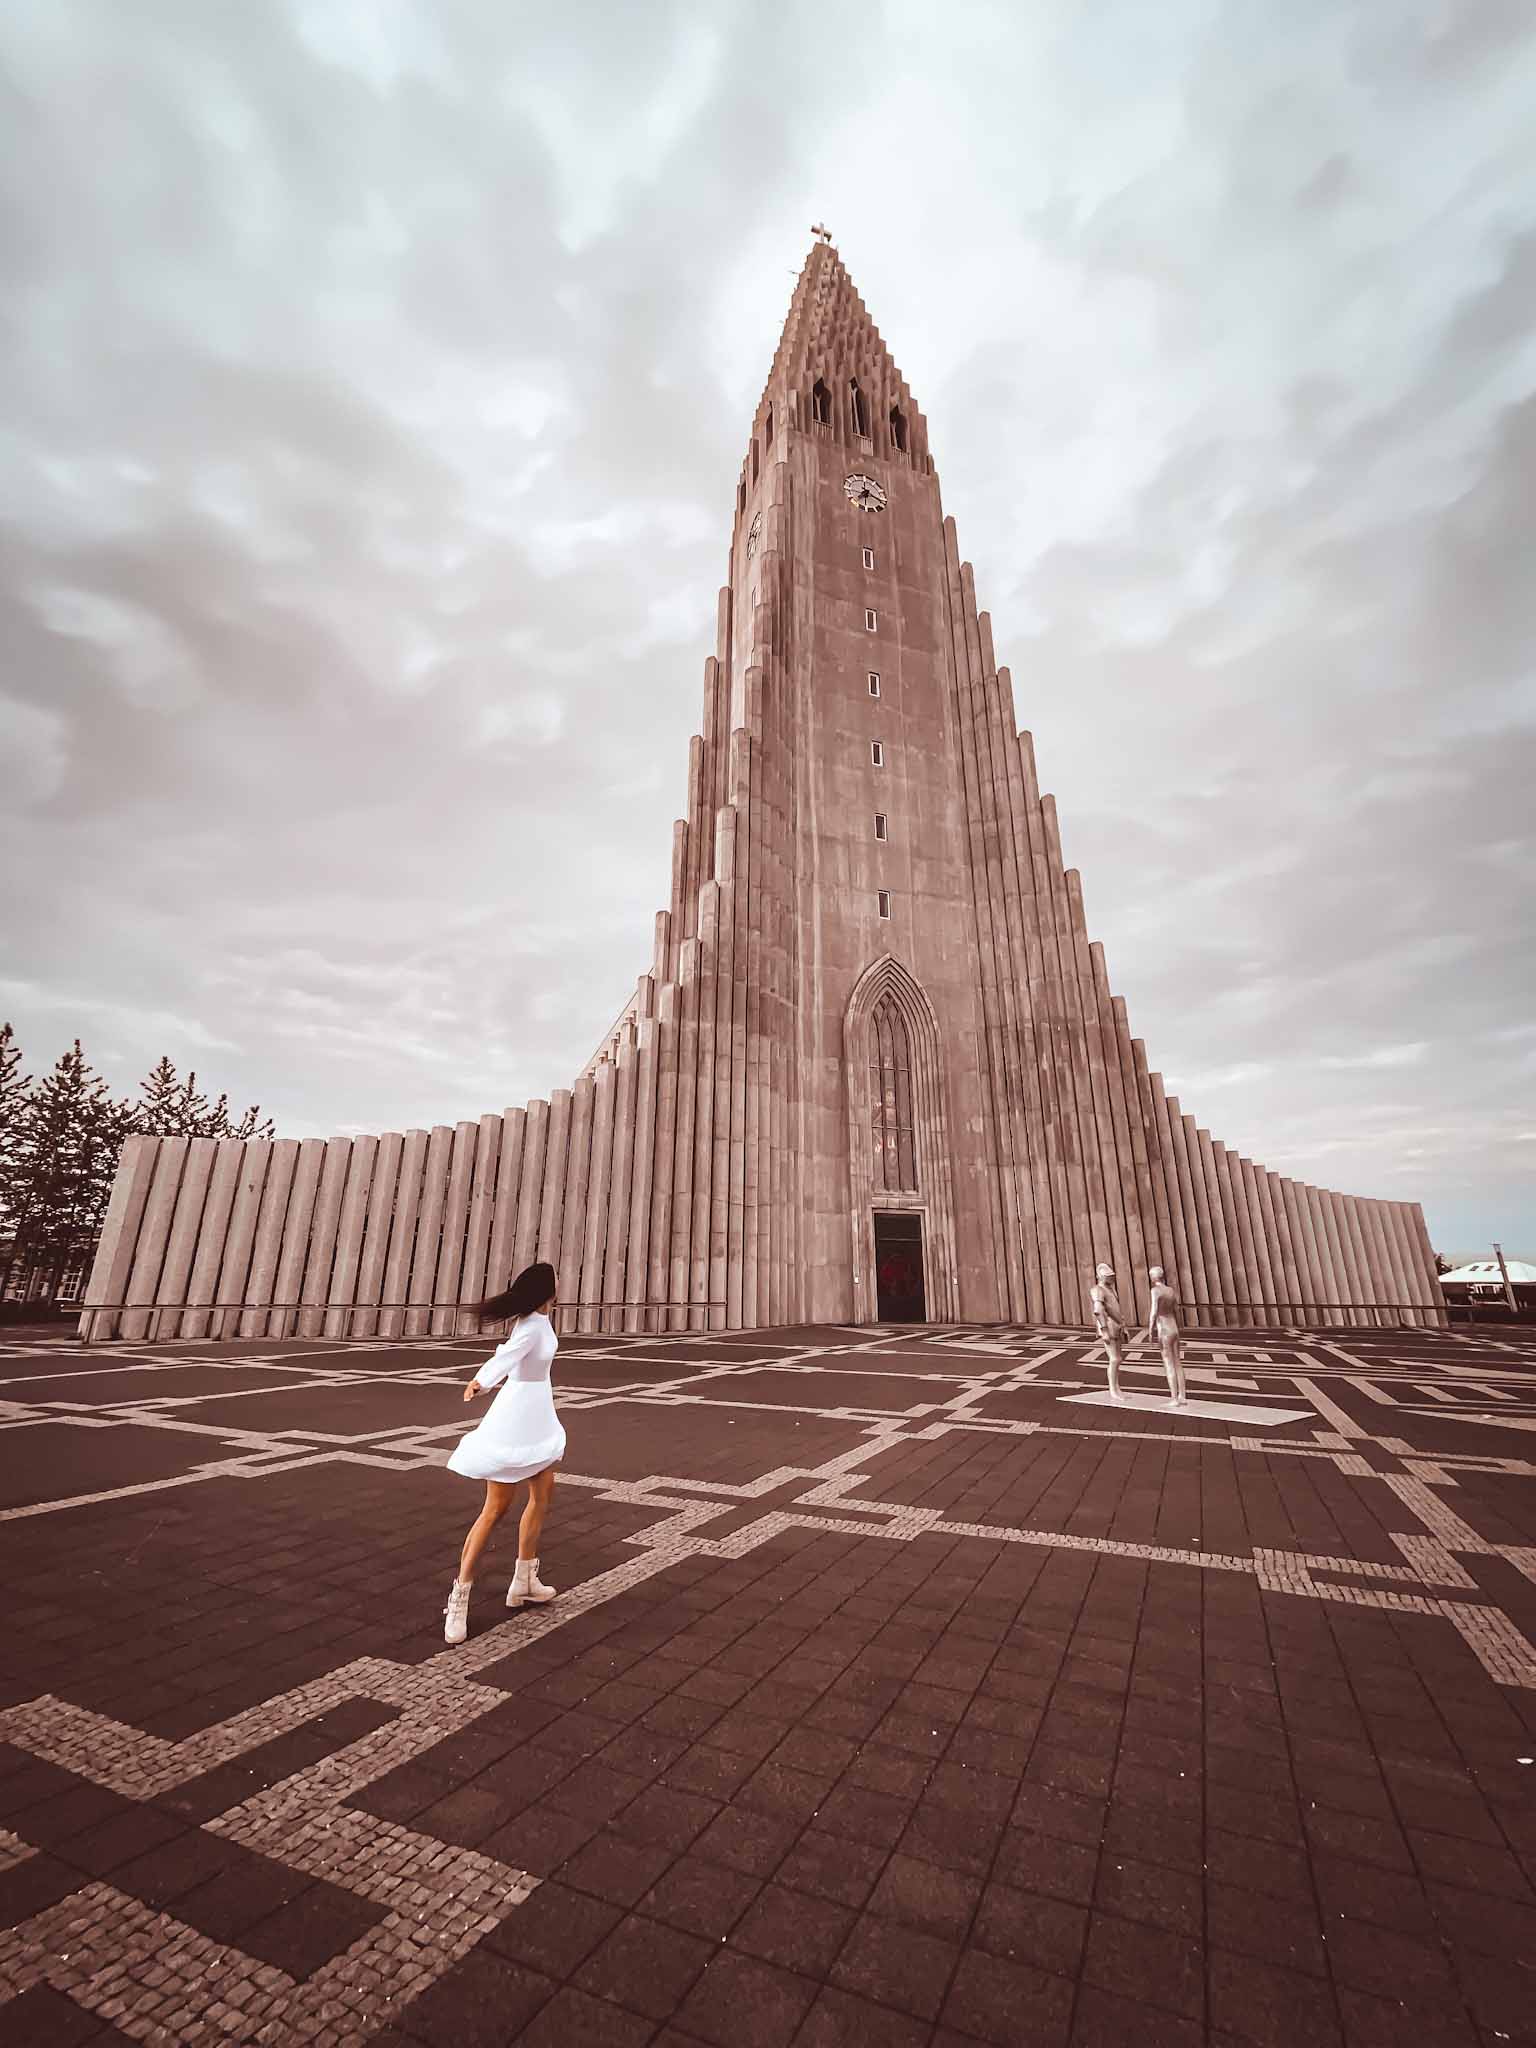 Iceland Instagram spots - Hallgrimskirkja - Churches in Iceland